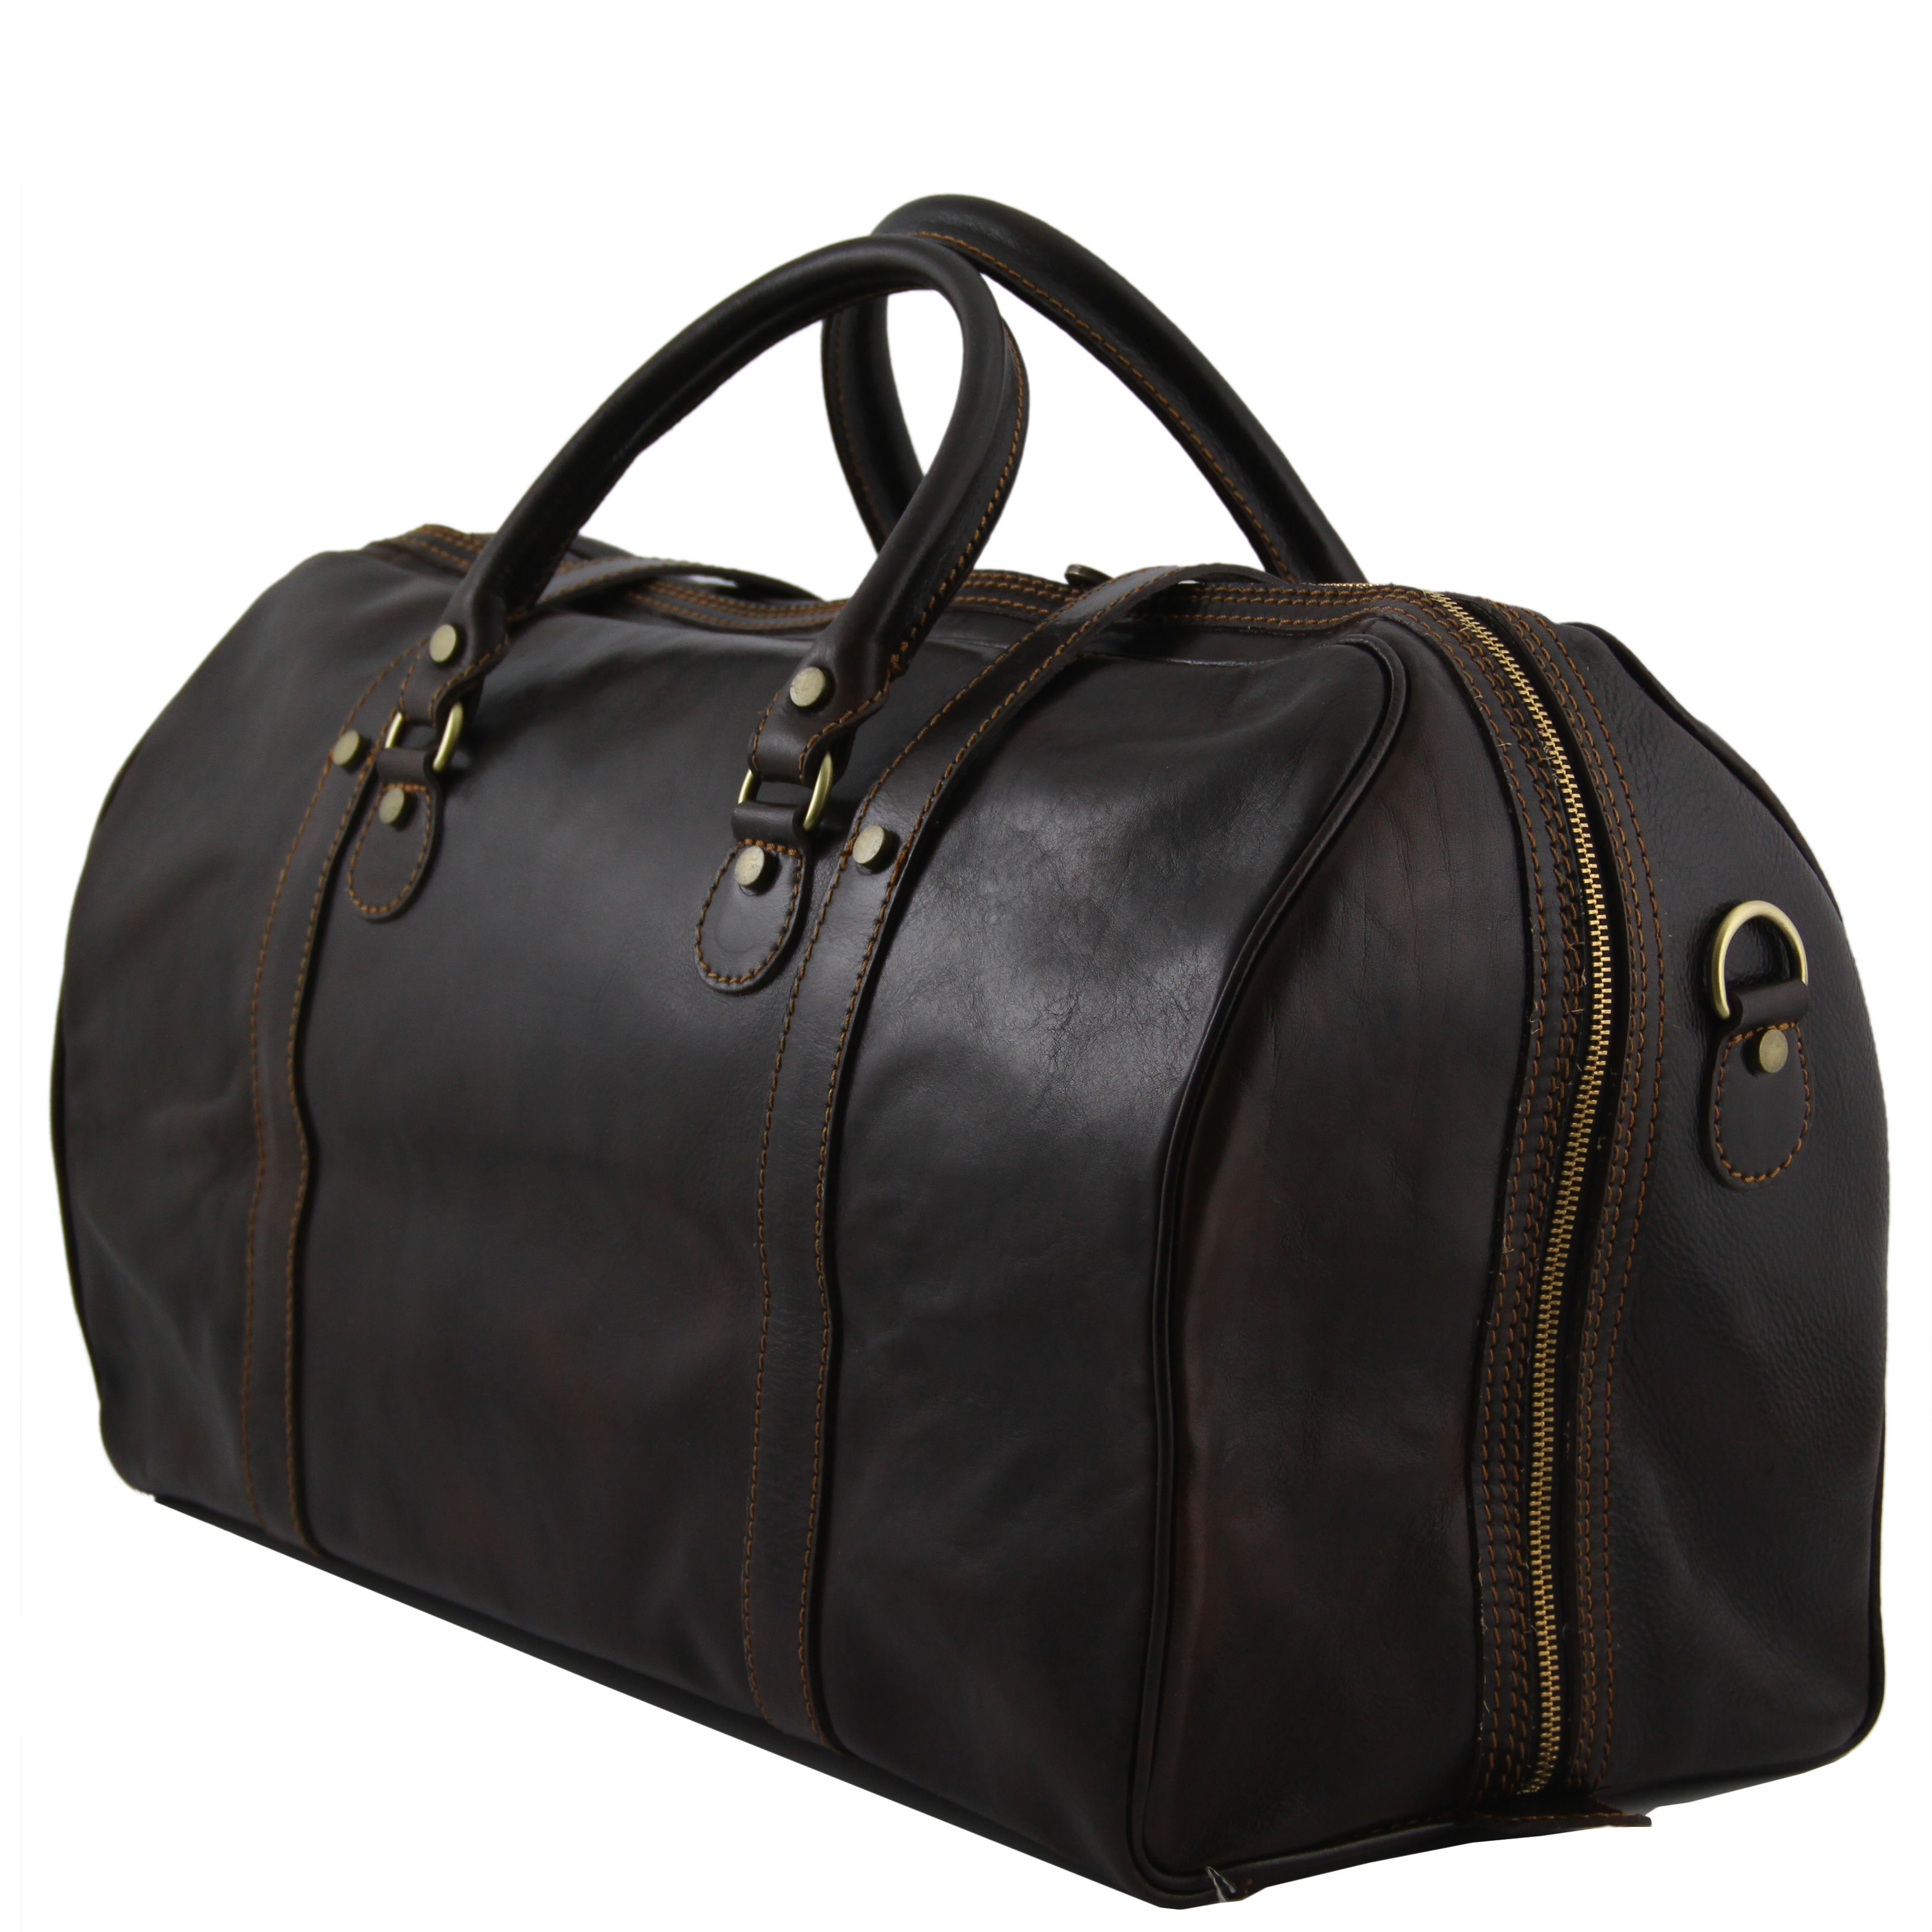 Berlin Travel leather duffel bag Large